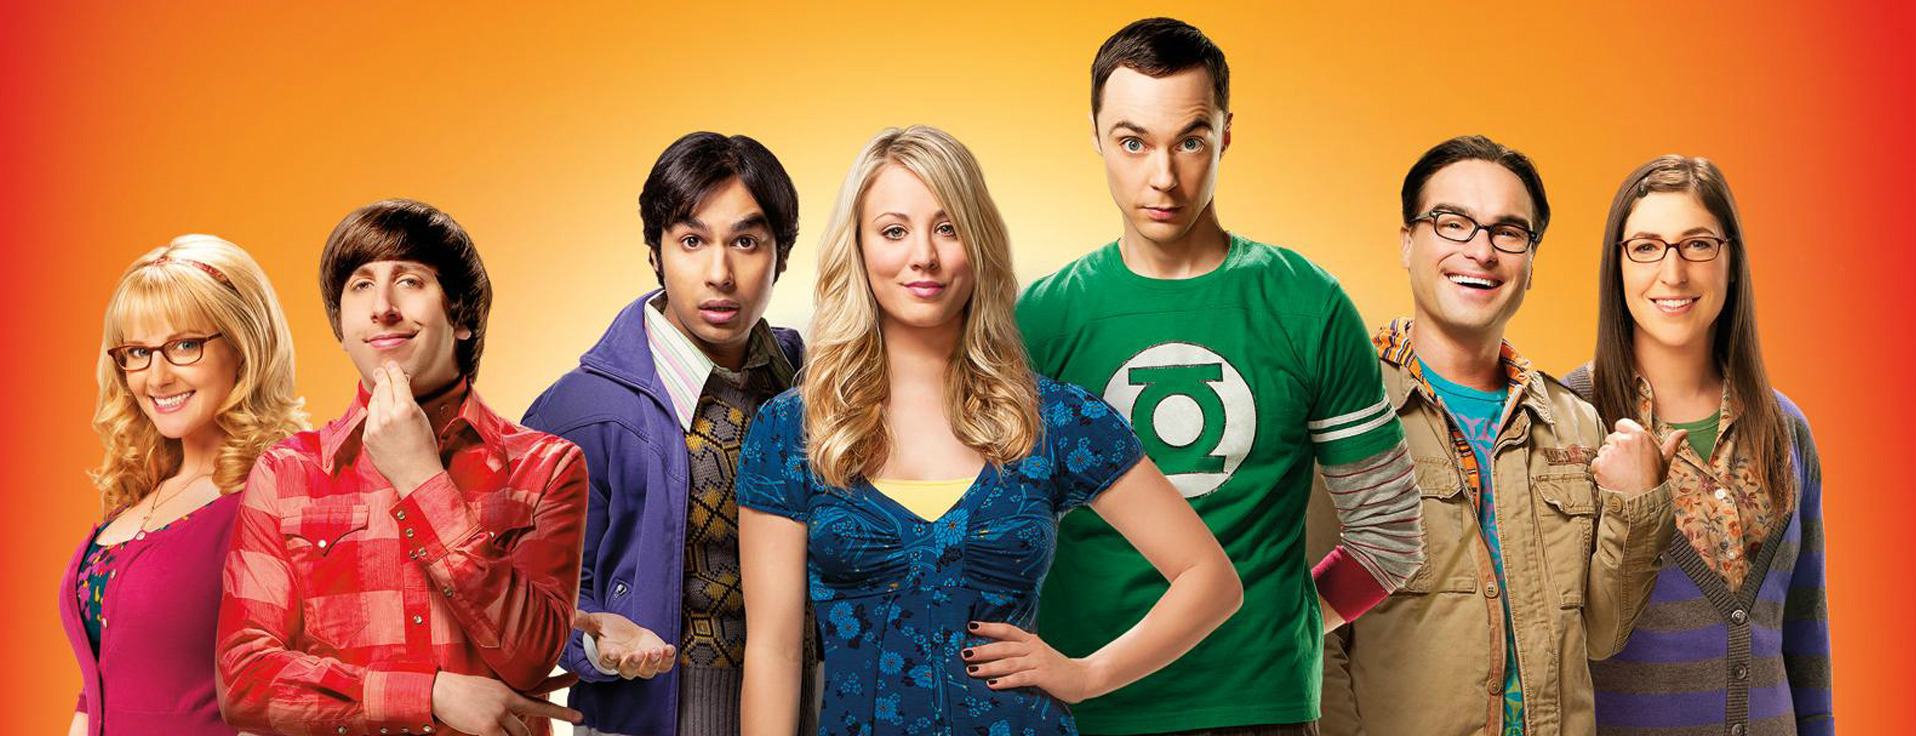 The Big Bang Theory saison 7 : promo pour The Occupation Recalibration